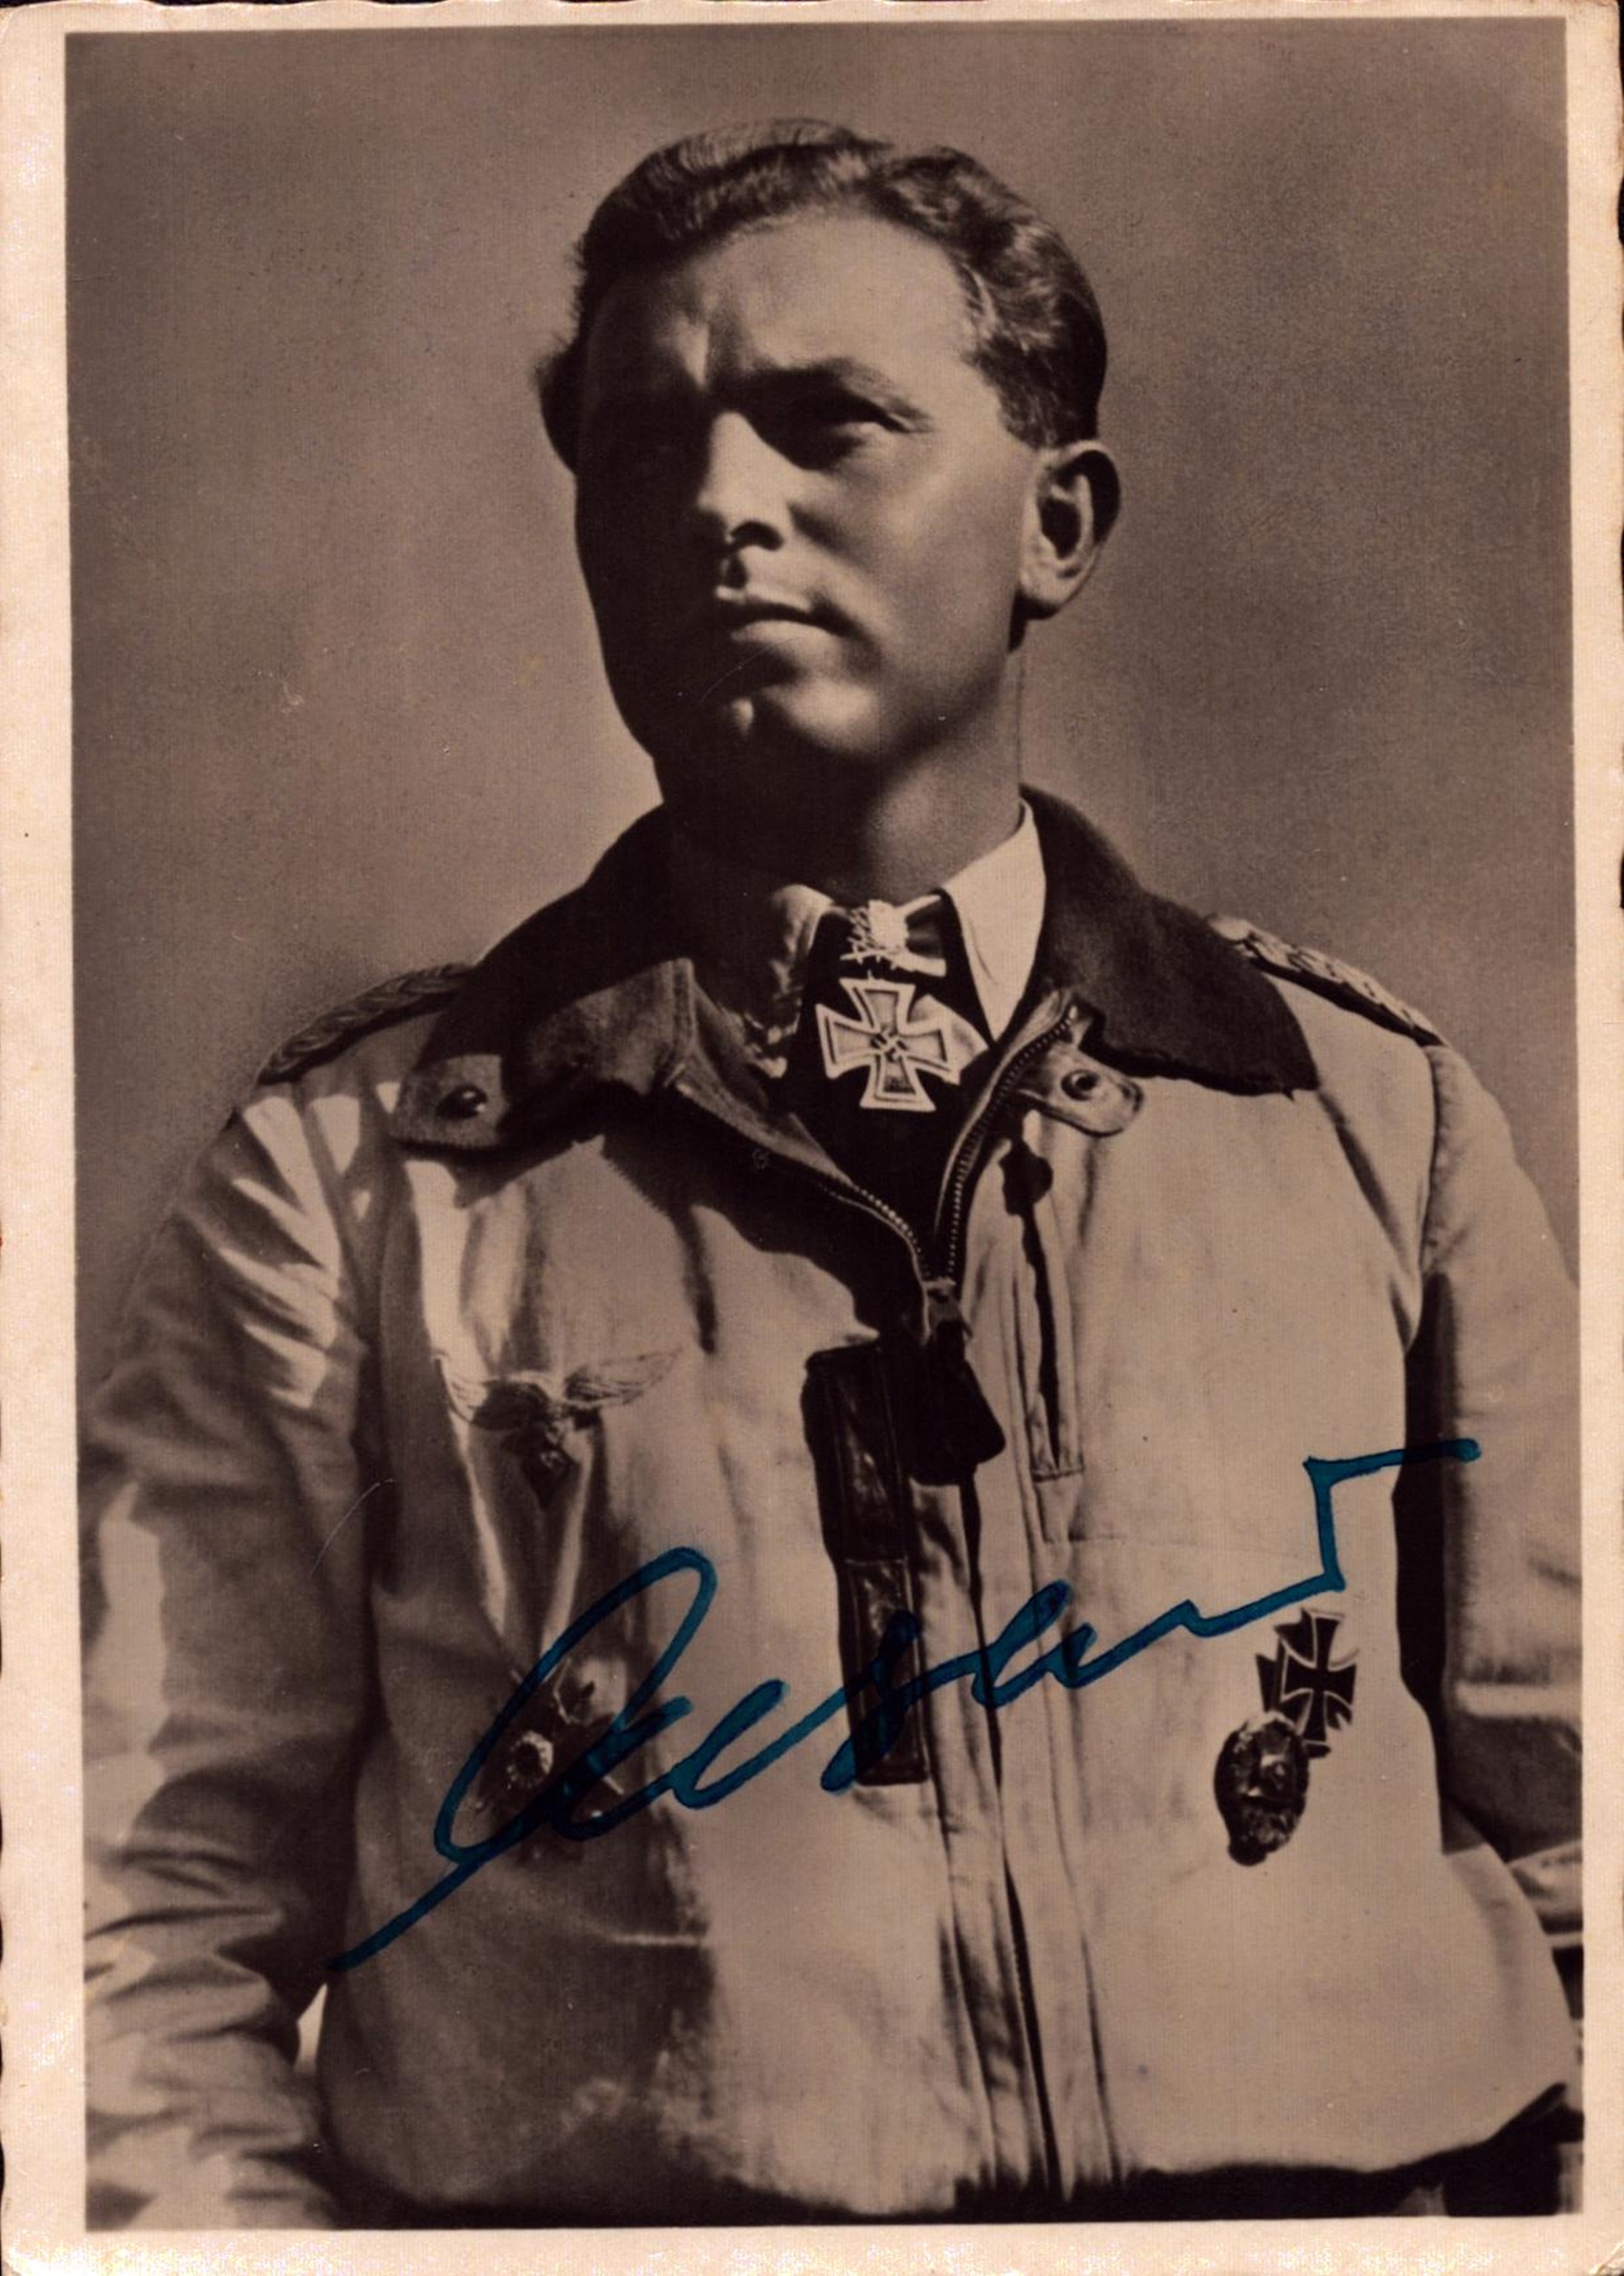 Luftwaffe Ace Walter Oesau signed 6x4 inch approx sepia photo. Walter "Gulle" Oesau (28 June